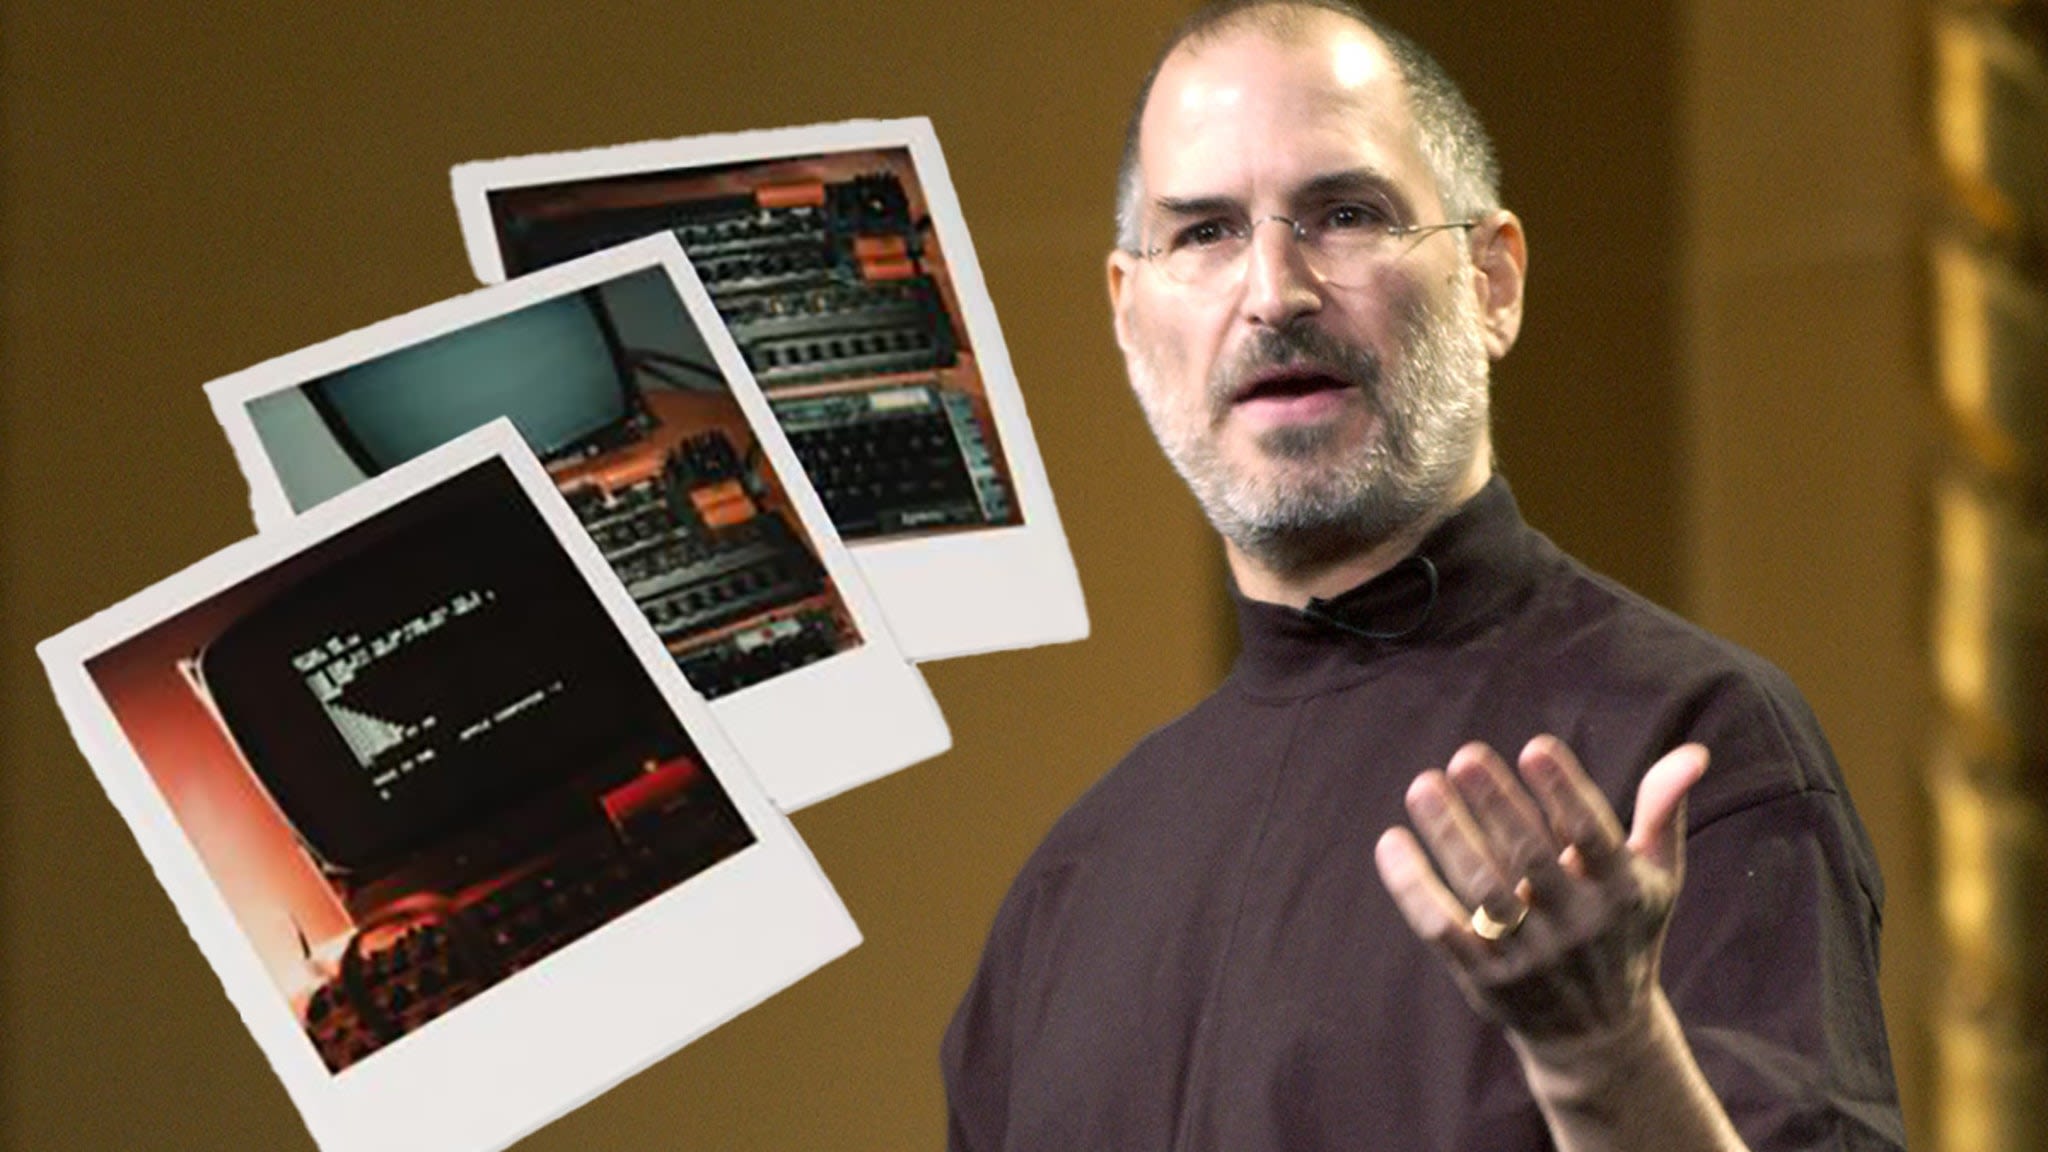 Original Polaroids of Apple-1 Prototype from Steve Jobs Pitch Demo Hit Auction Block (Exclusive)